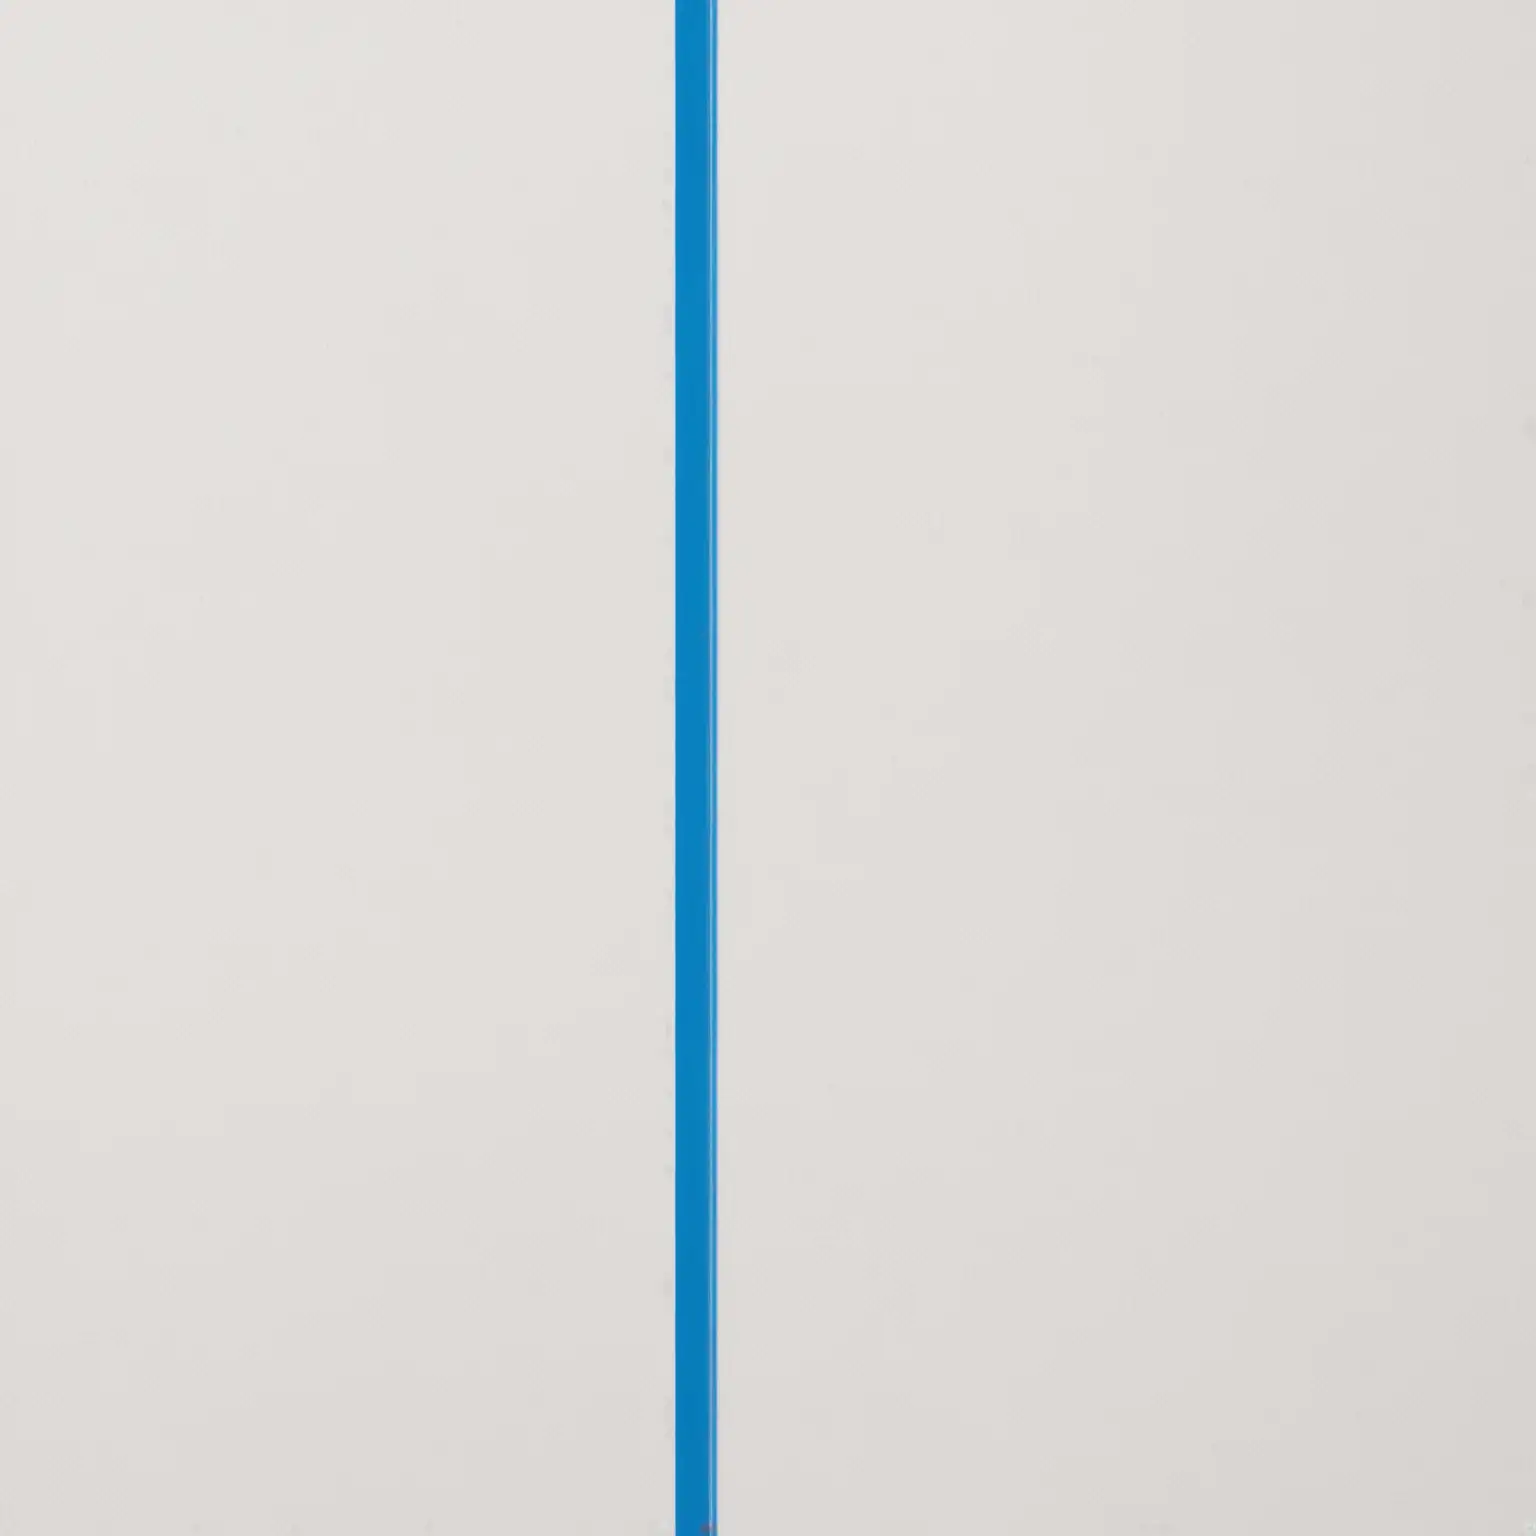 Vibrant Blue Line on Pristine White Background